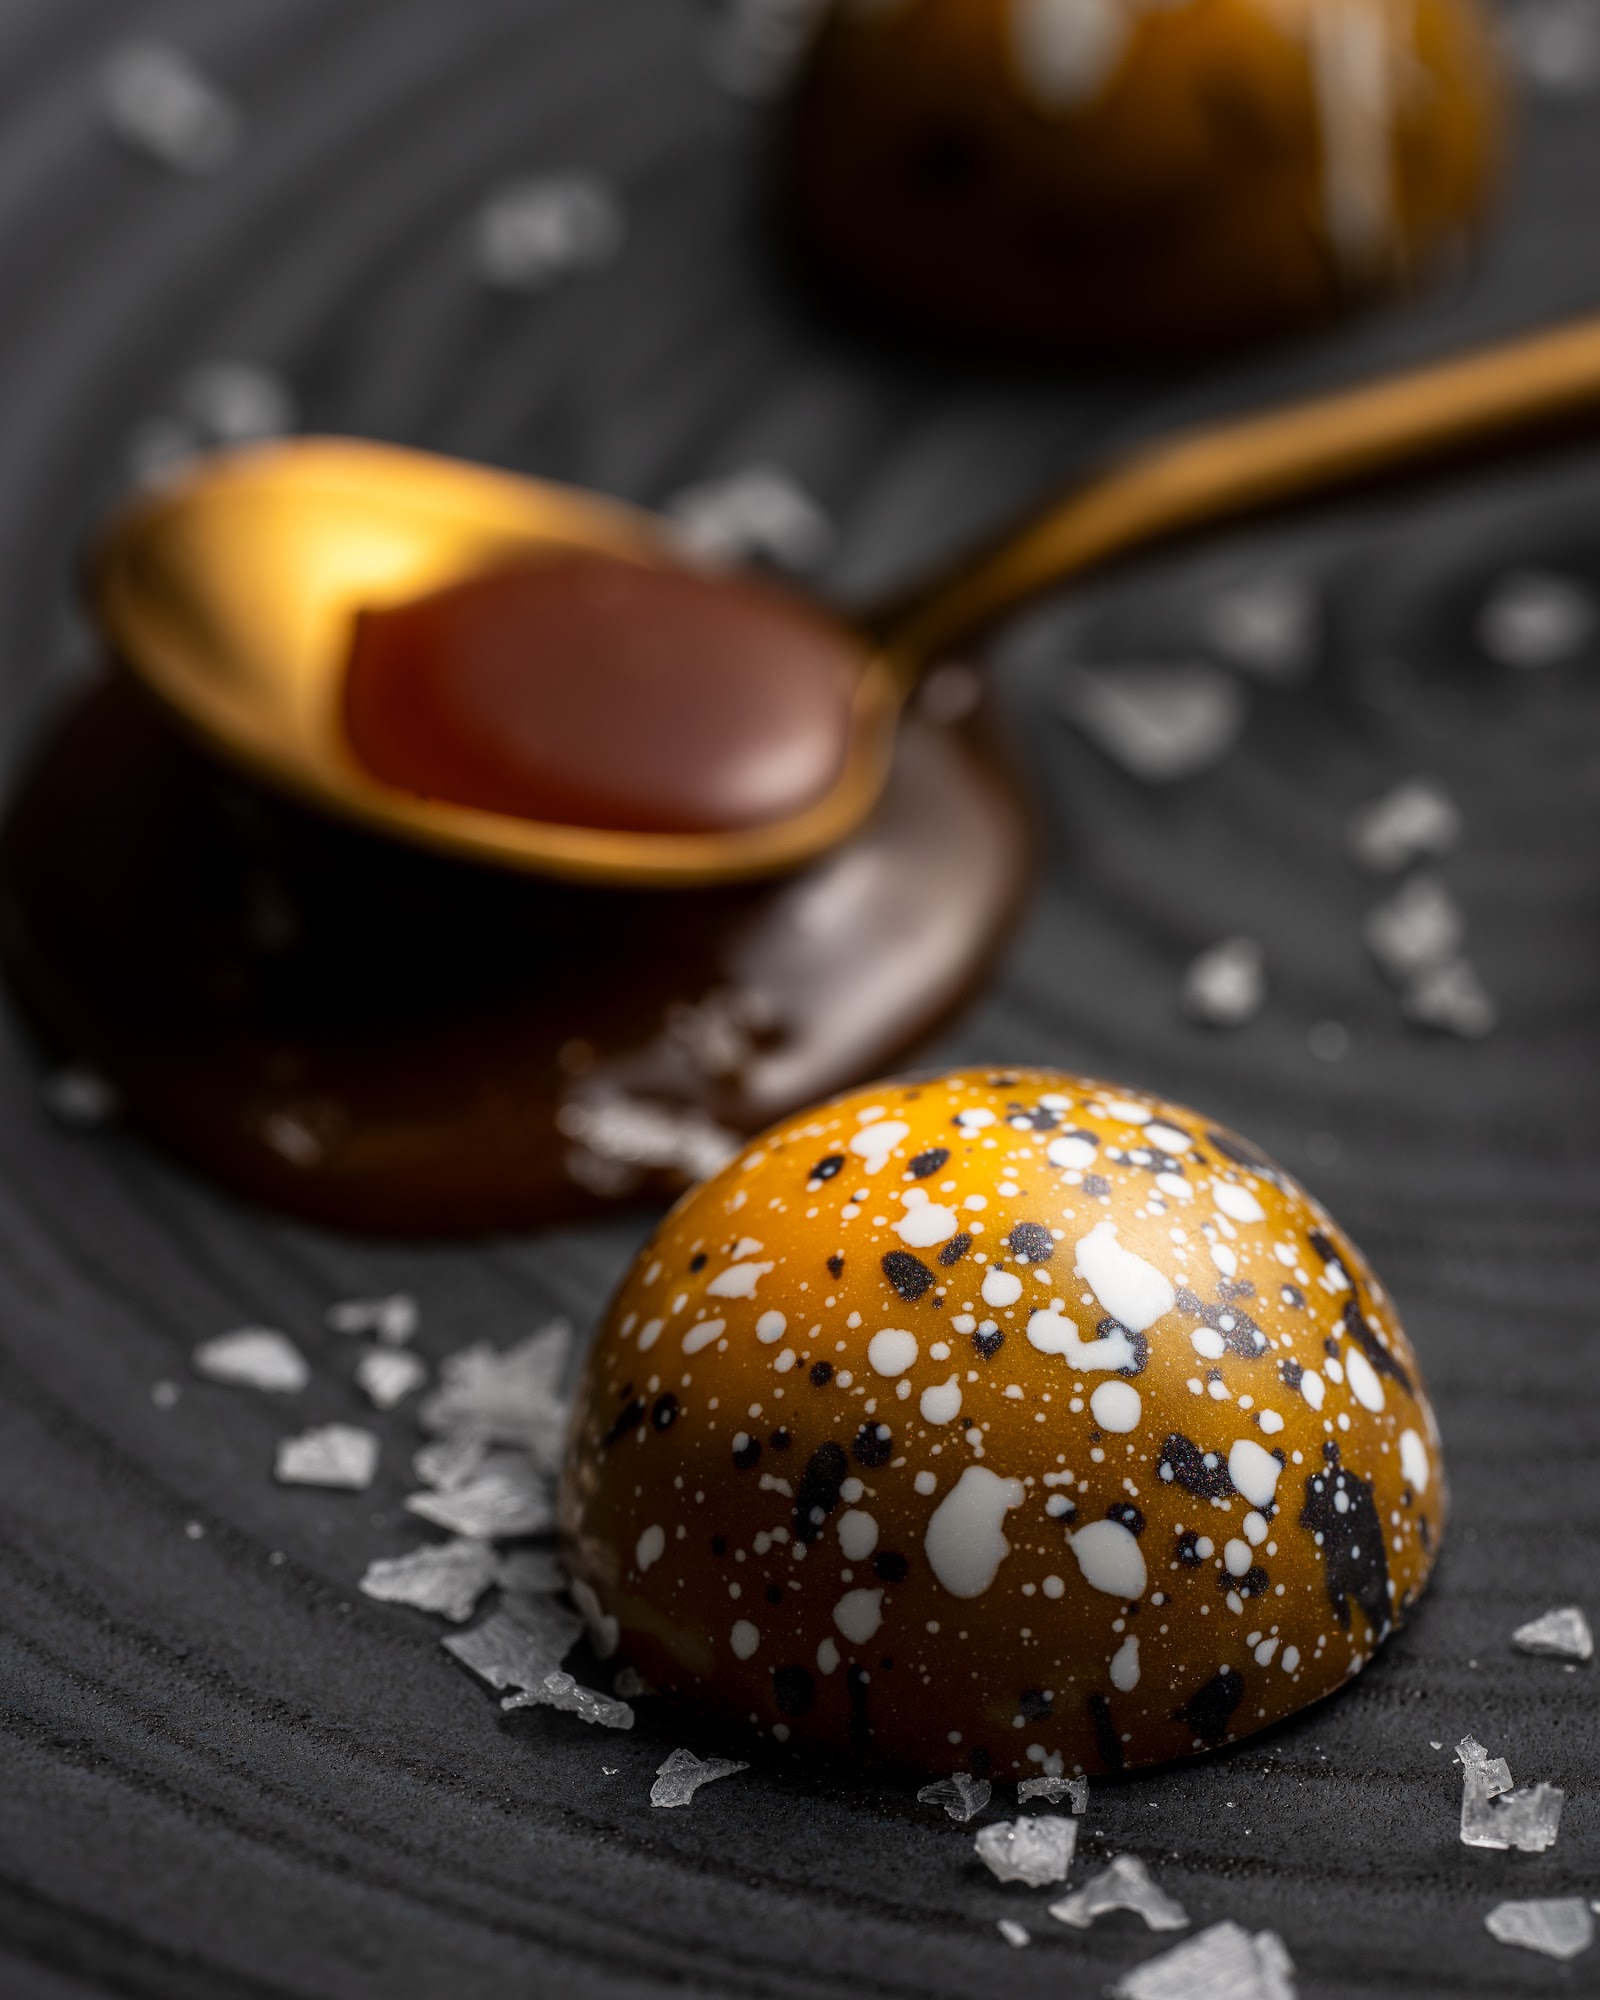 Rousseau Chocolatier